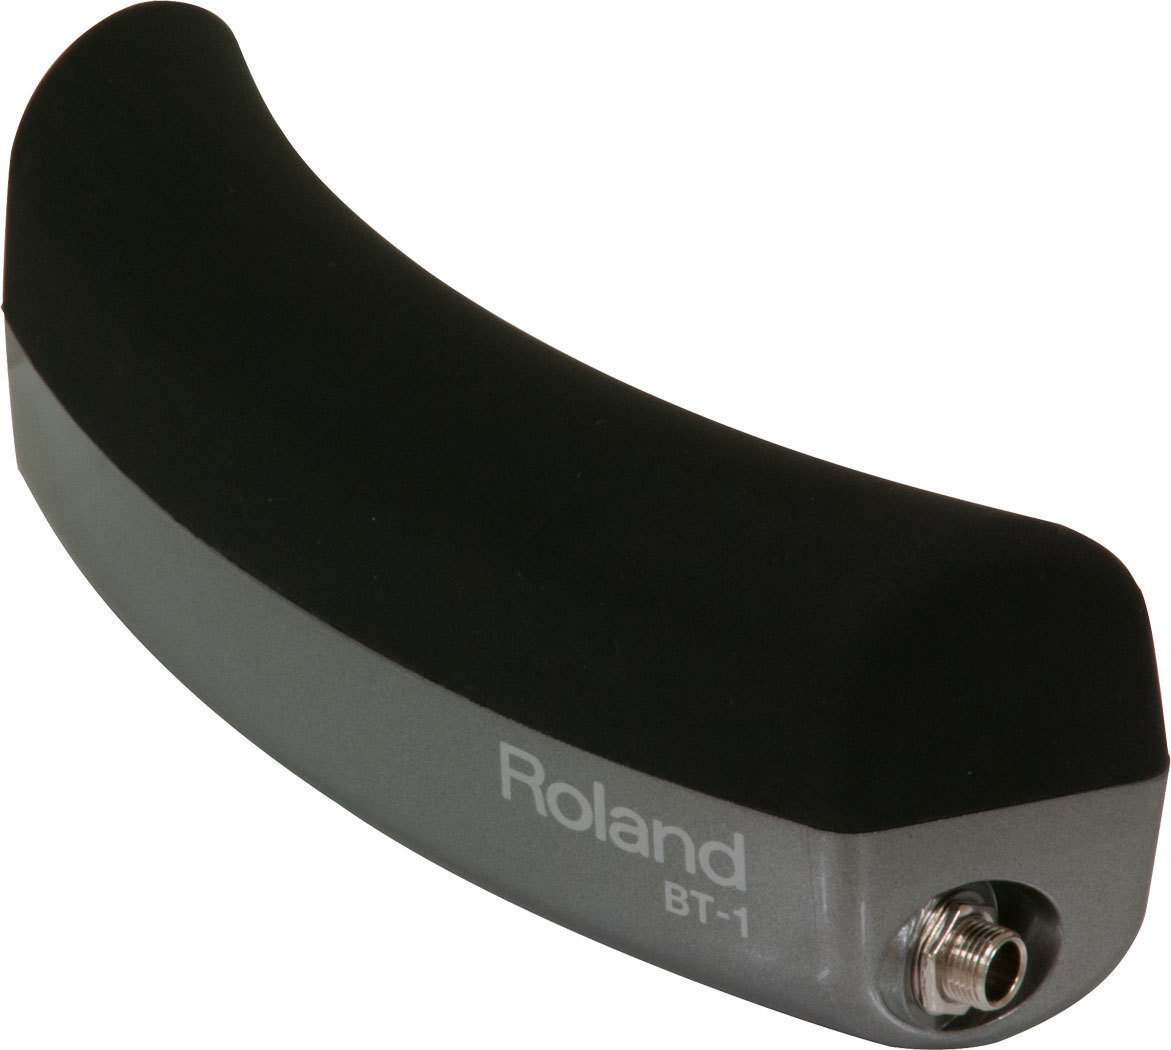 Sampling/Multipad Roland BT-1